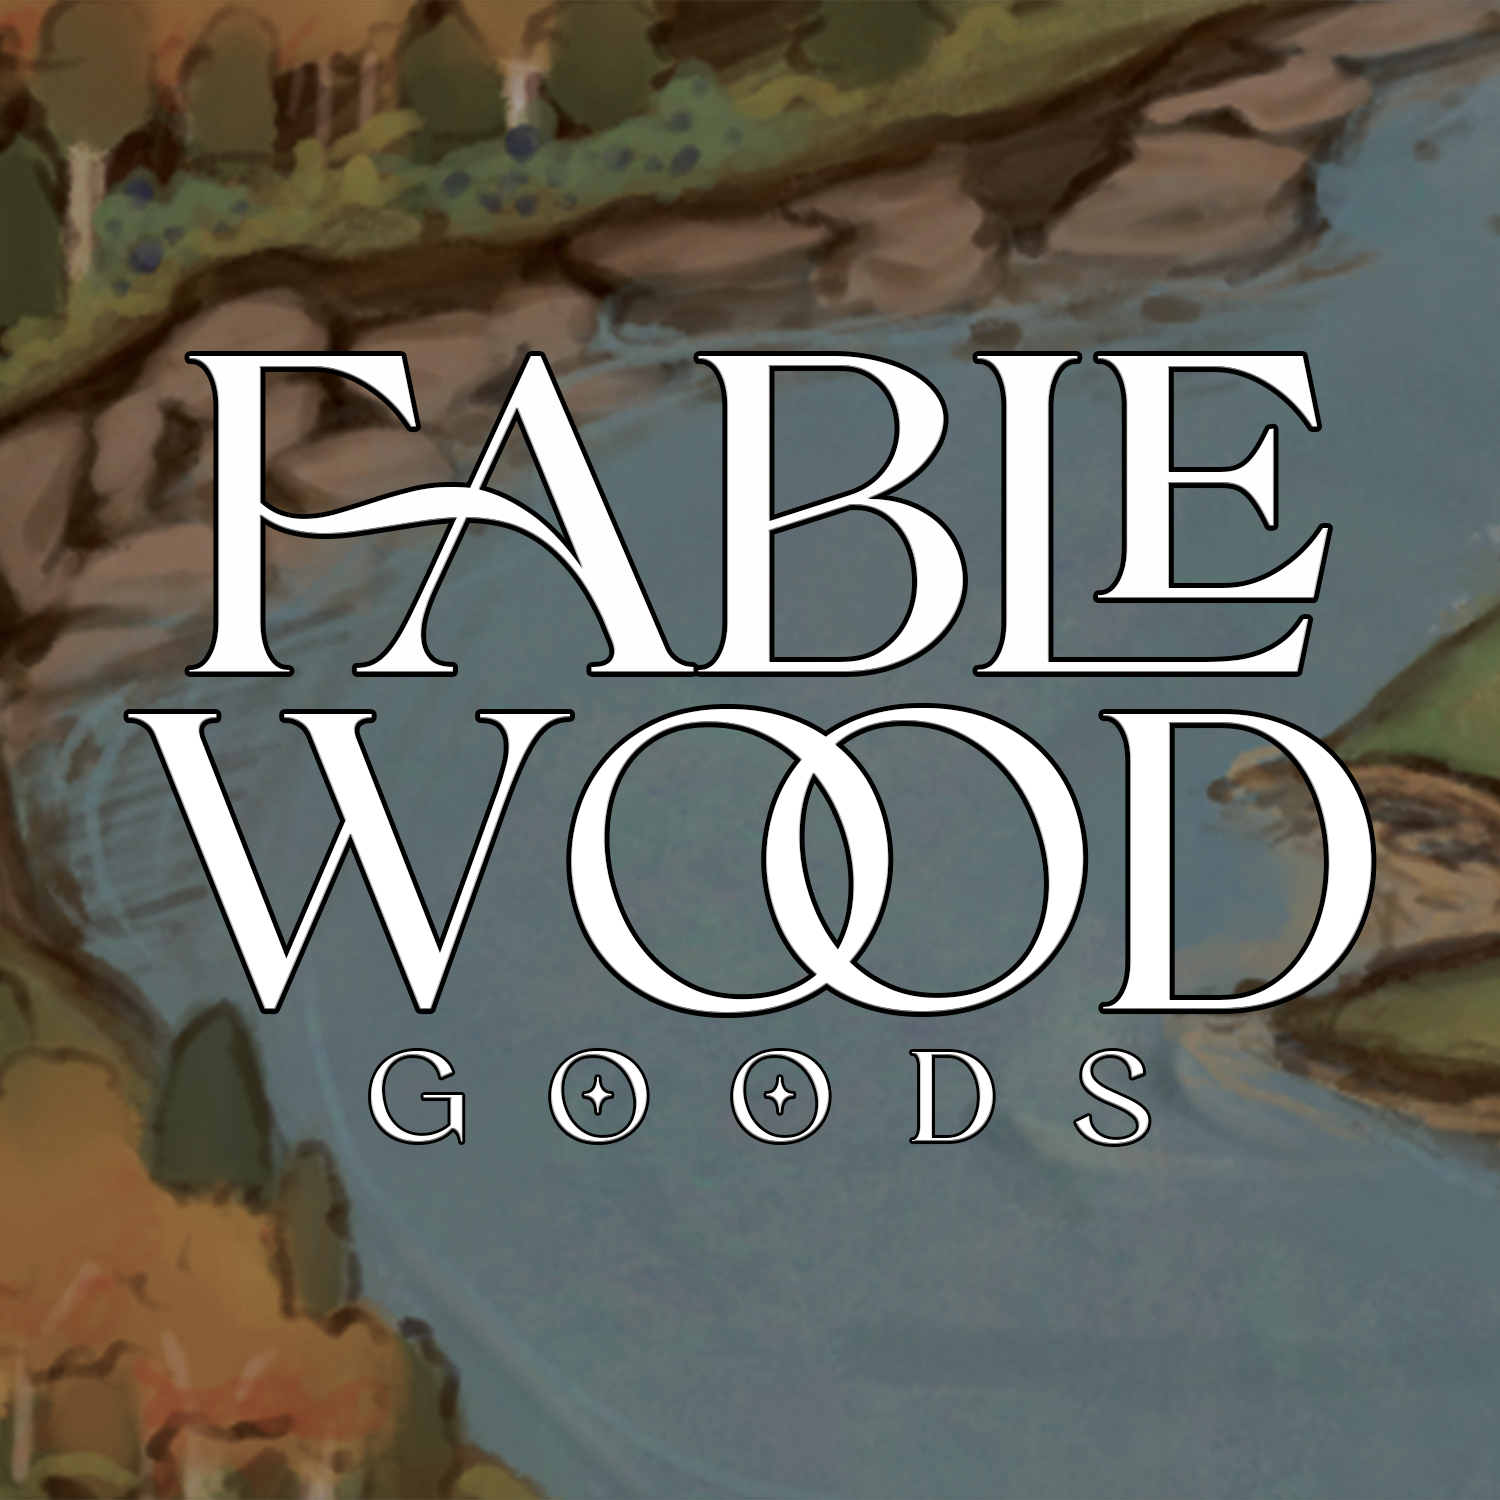 Fablewood Goods